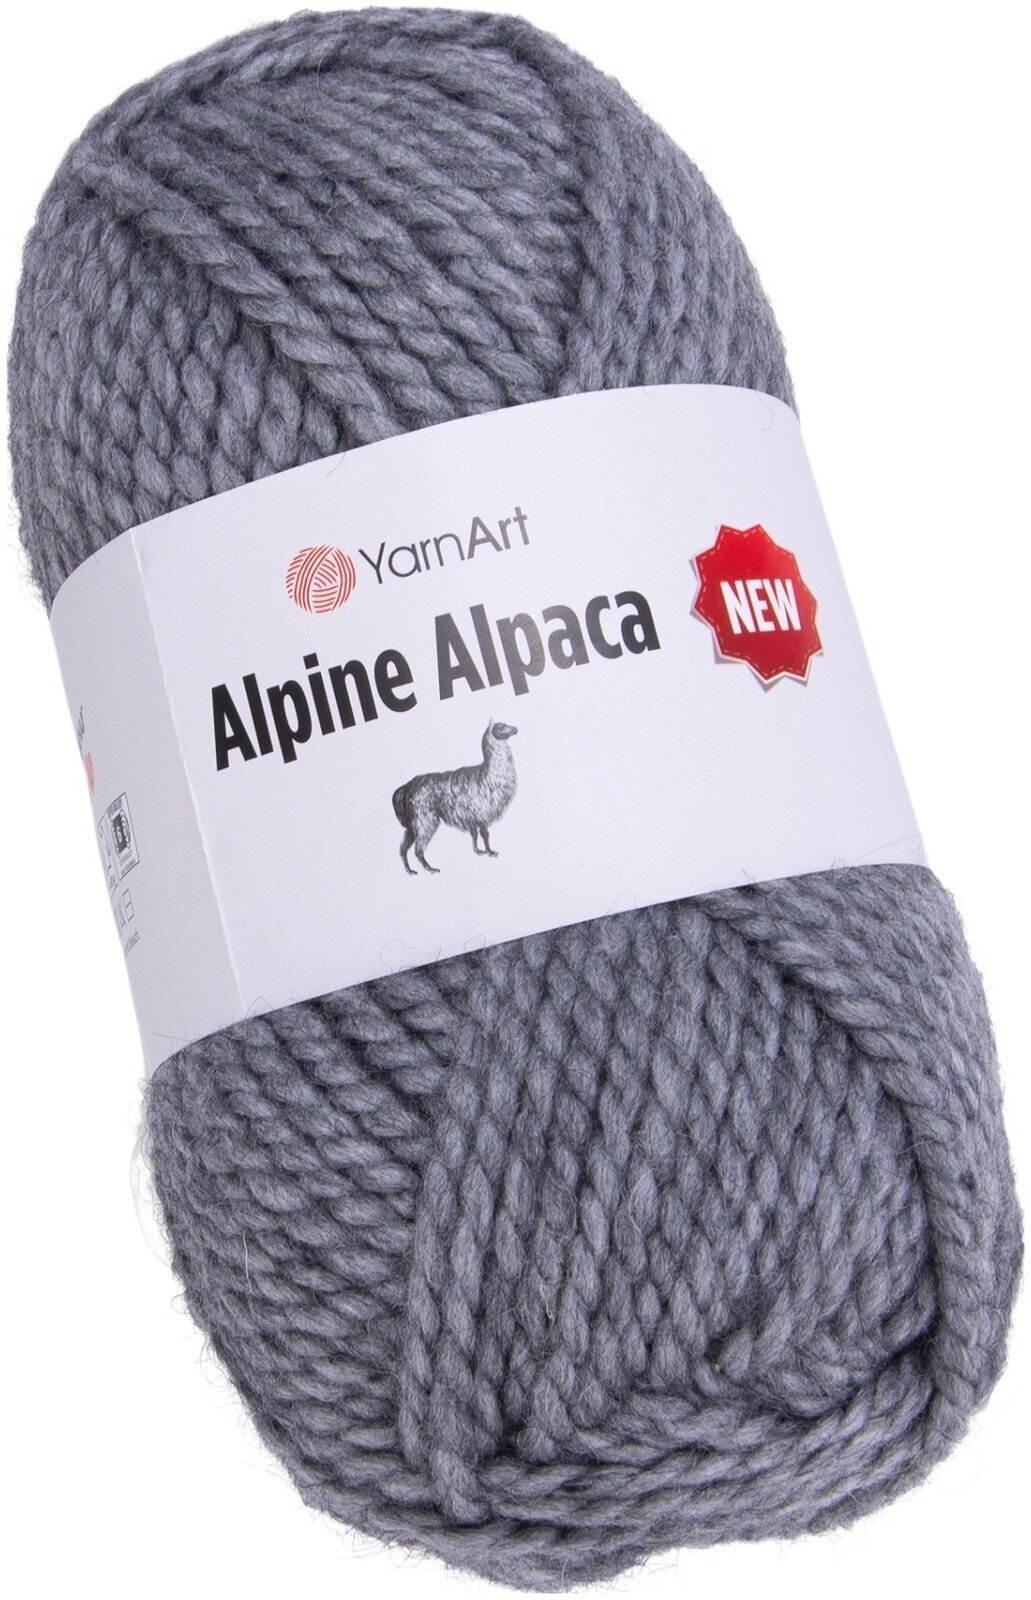 Knitting Yarn Yarn Art Alpine Alpaca 1447